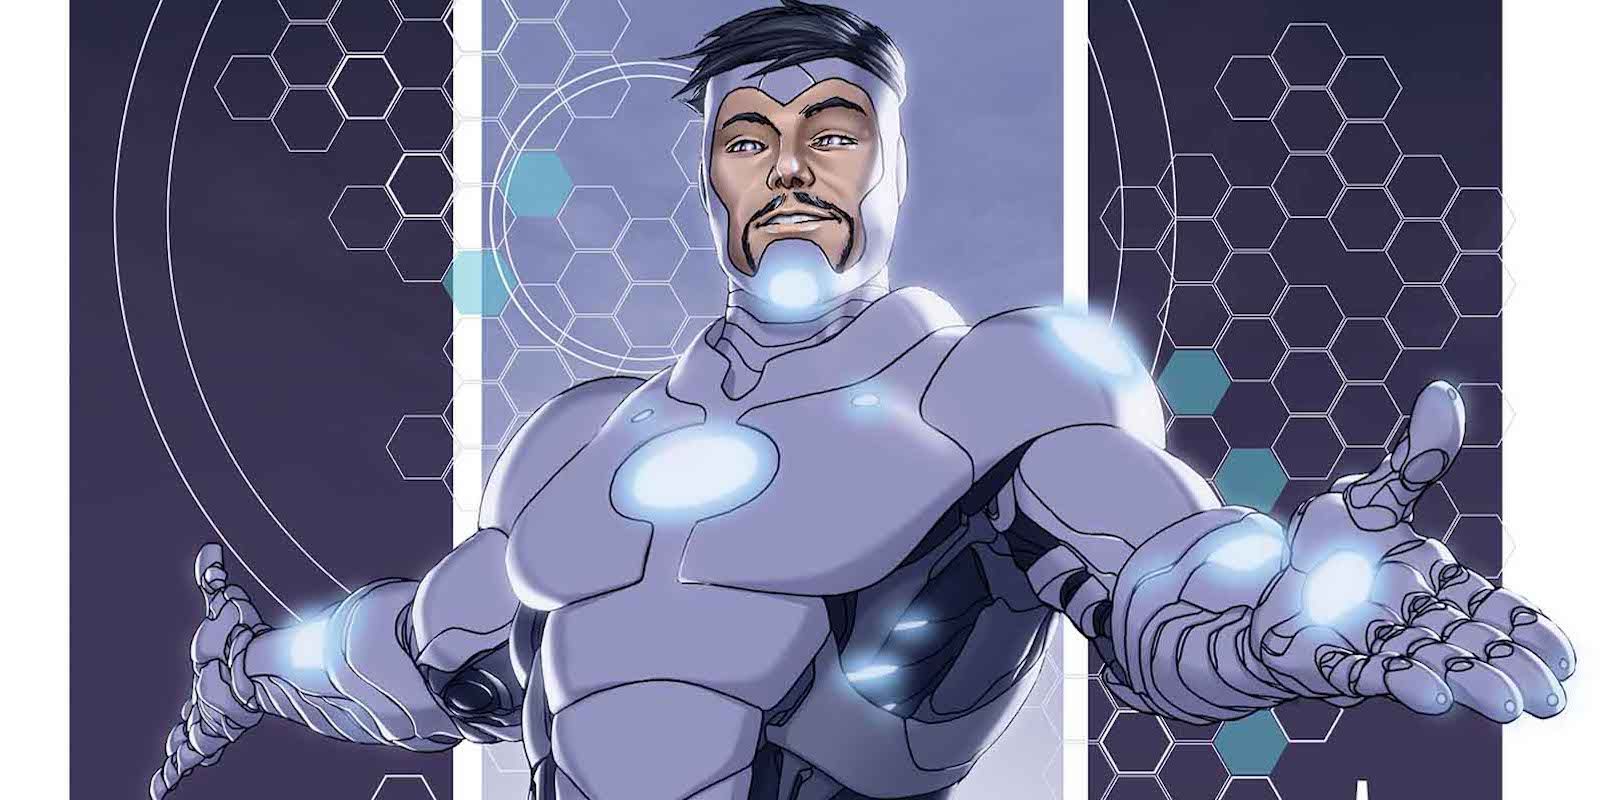 Tony Stark in the Superior Iron Man armor in Marvel Comics.